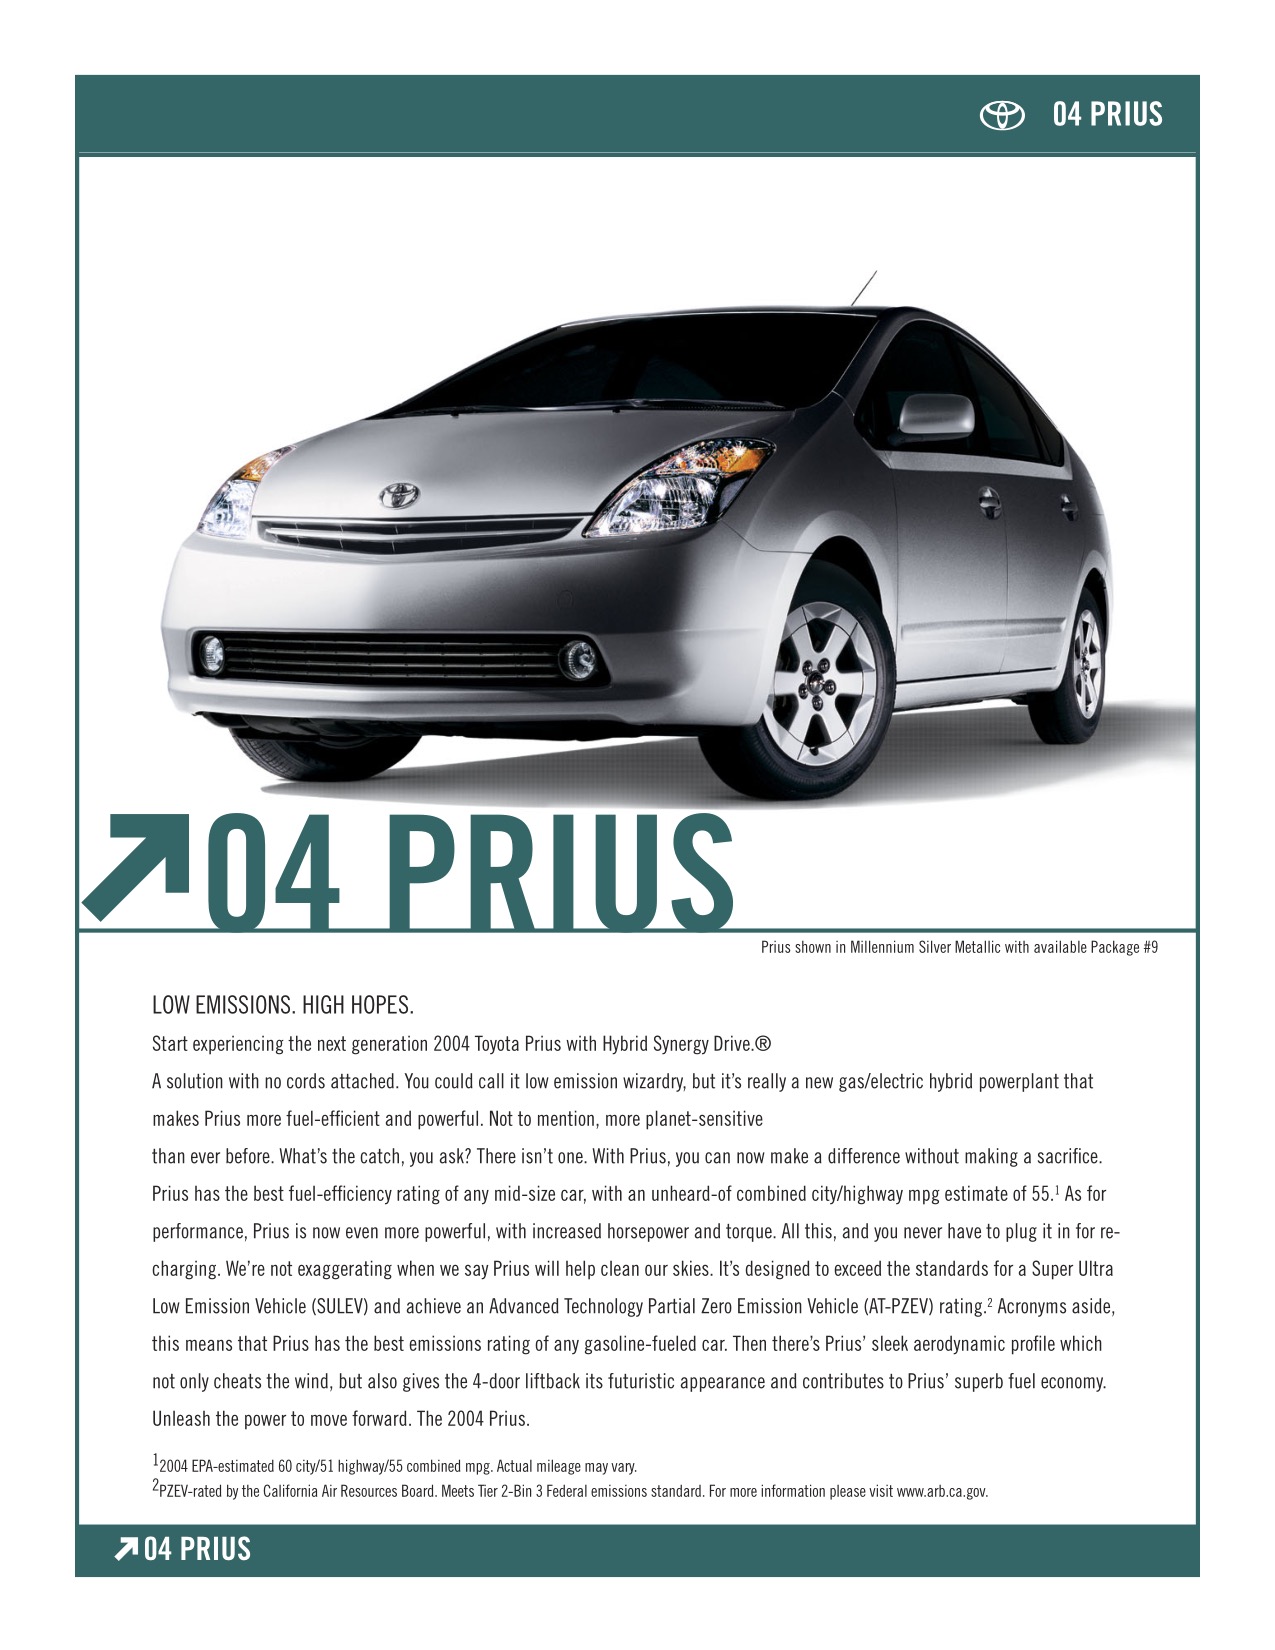 2004 Toyota Prius Brochure